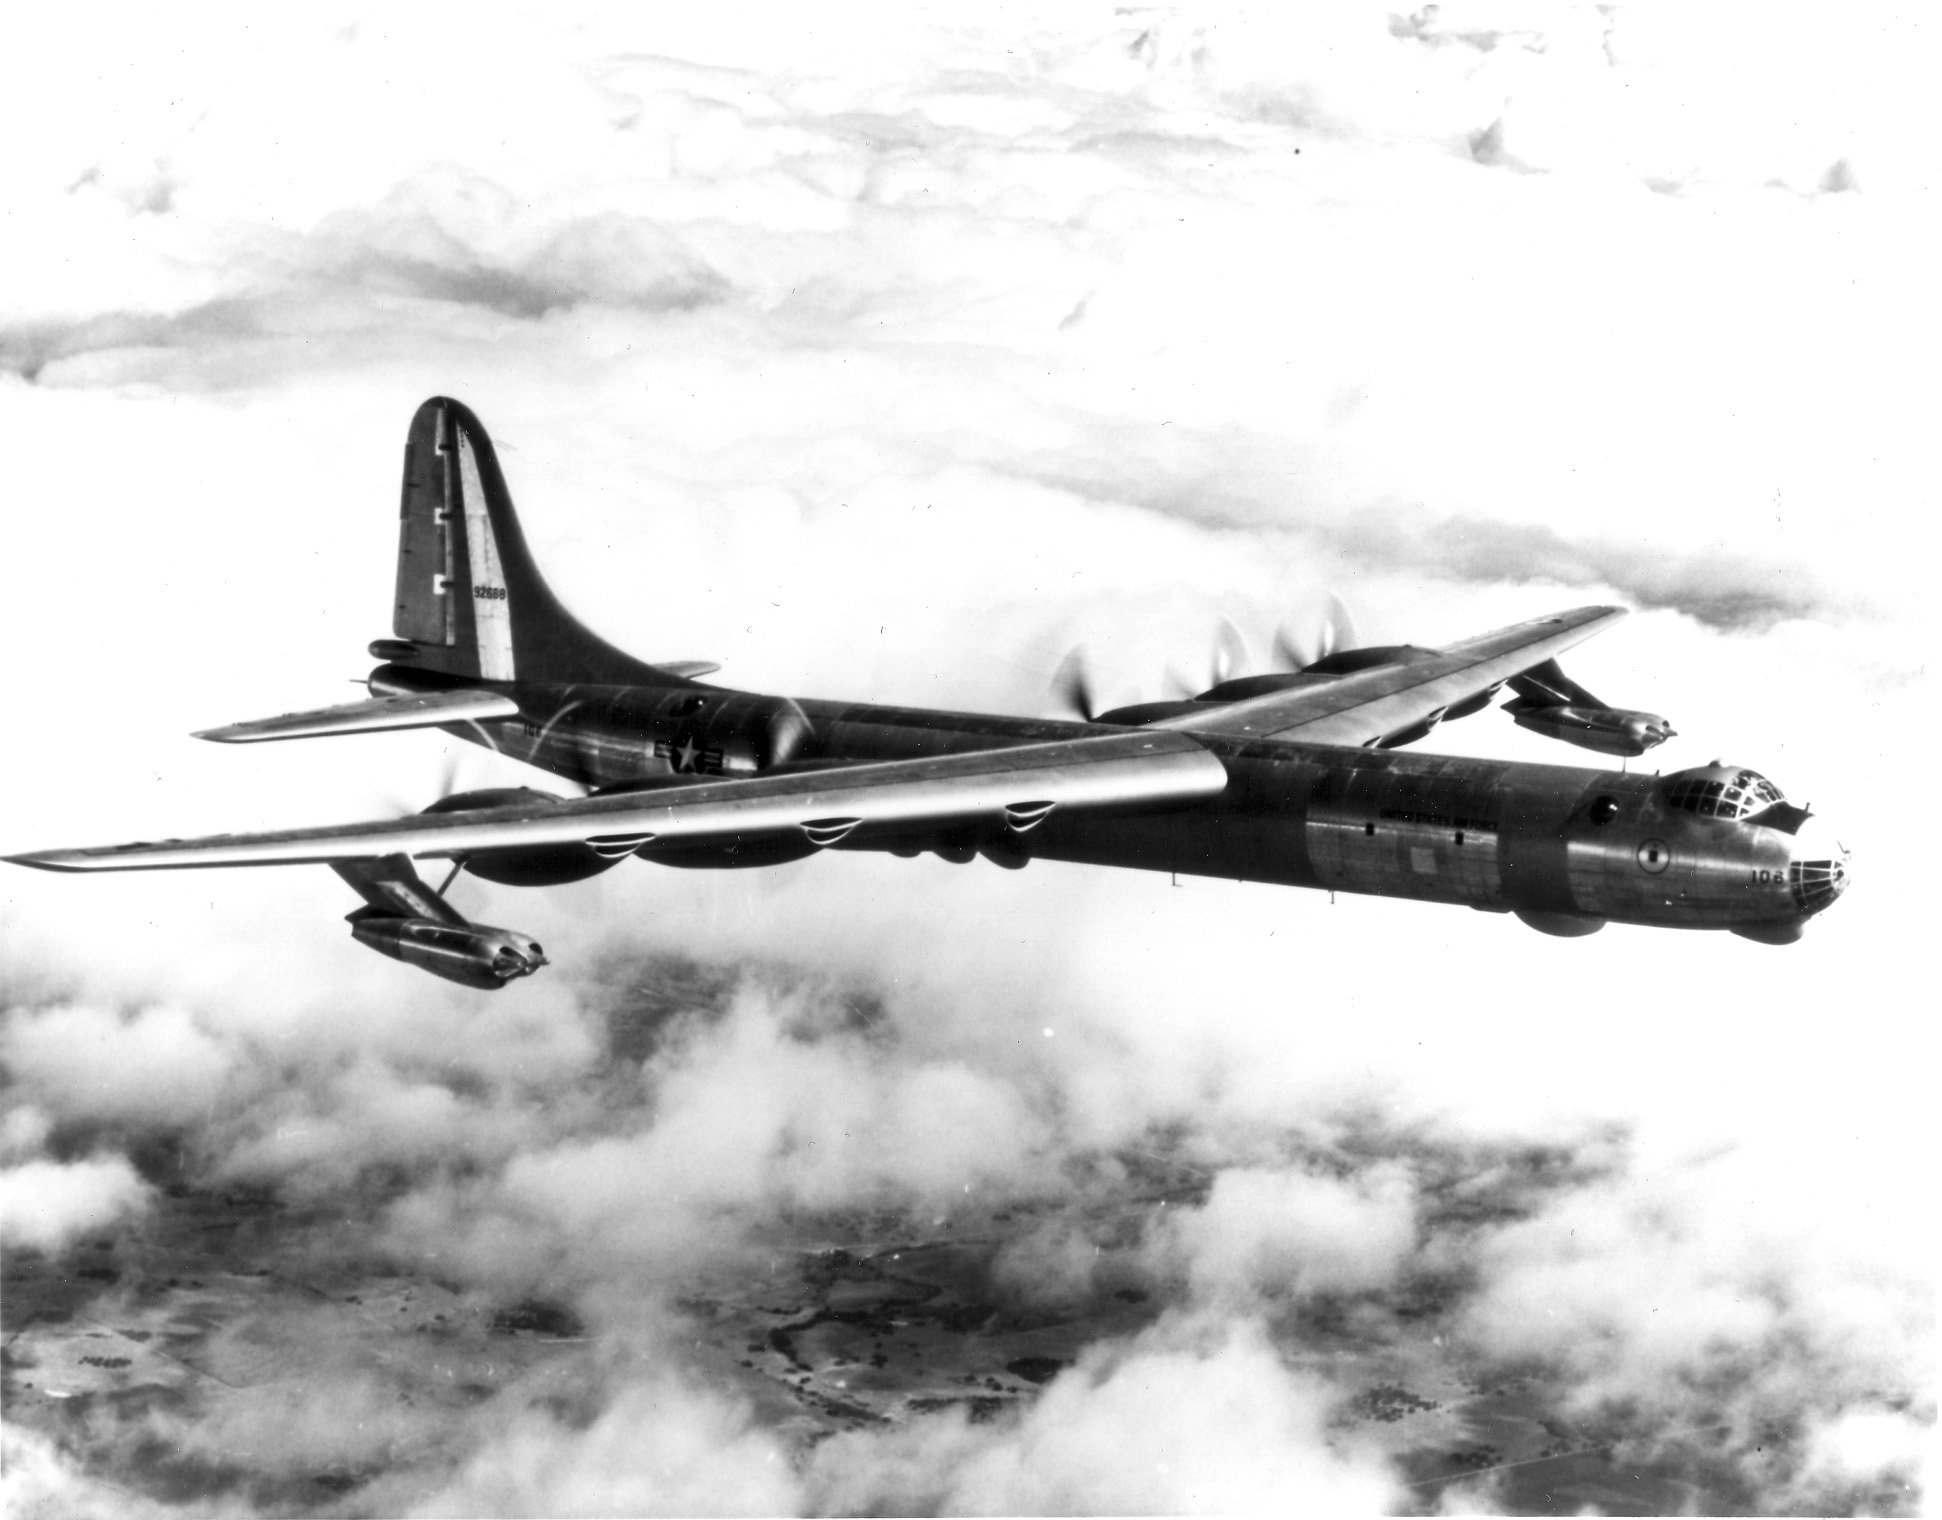 Convair_B-36_Peacemaker_in_flight.jpg